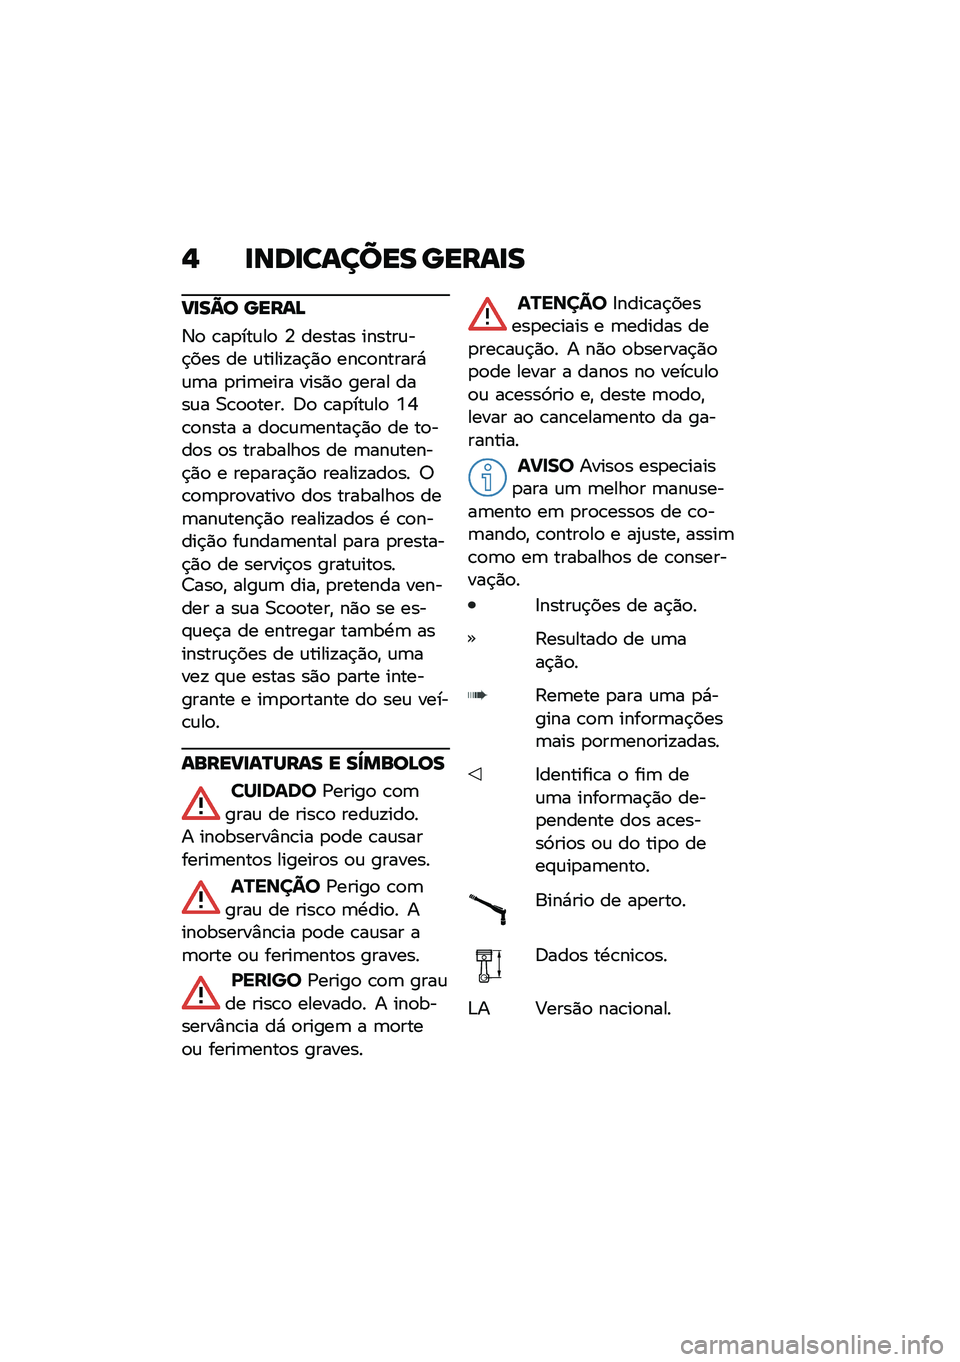 BMW MOTORRAD C 400 GT 2020  Manual do condutor (in Portuguese) �$ �
���
������ �����
�
��
��=� �����>
�3�
 �\b��
���\f��
 �4 ������ ������\f��$��� �� �\f�����!��$�)�
 ���\b�
������*�\f�	� �
���	���� ��